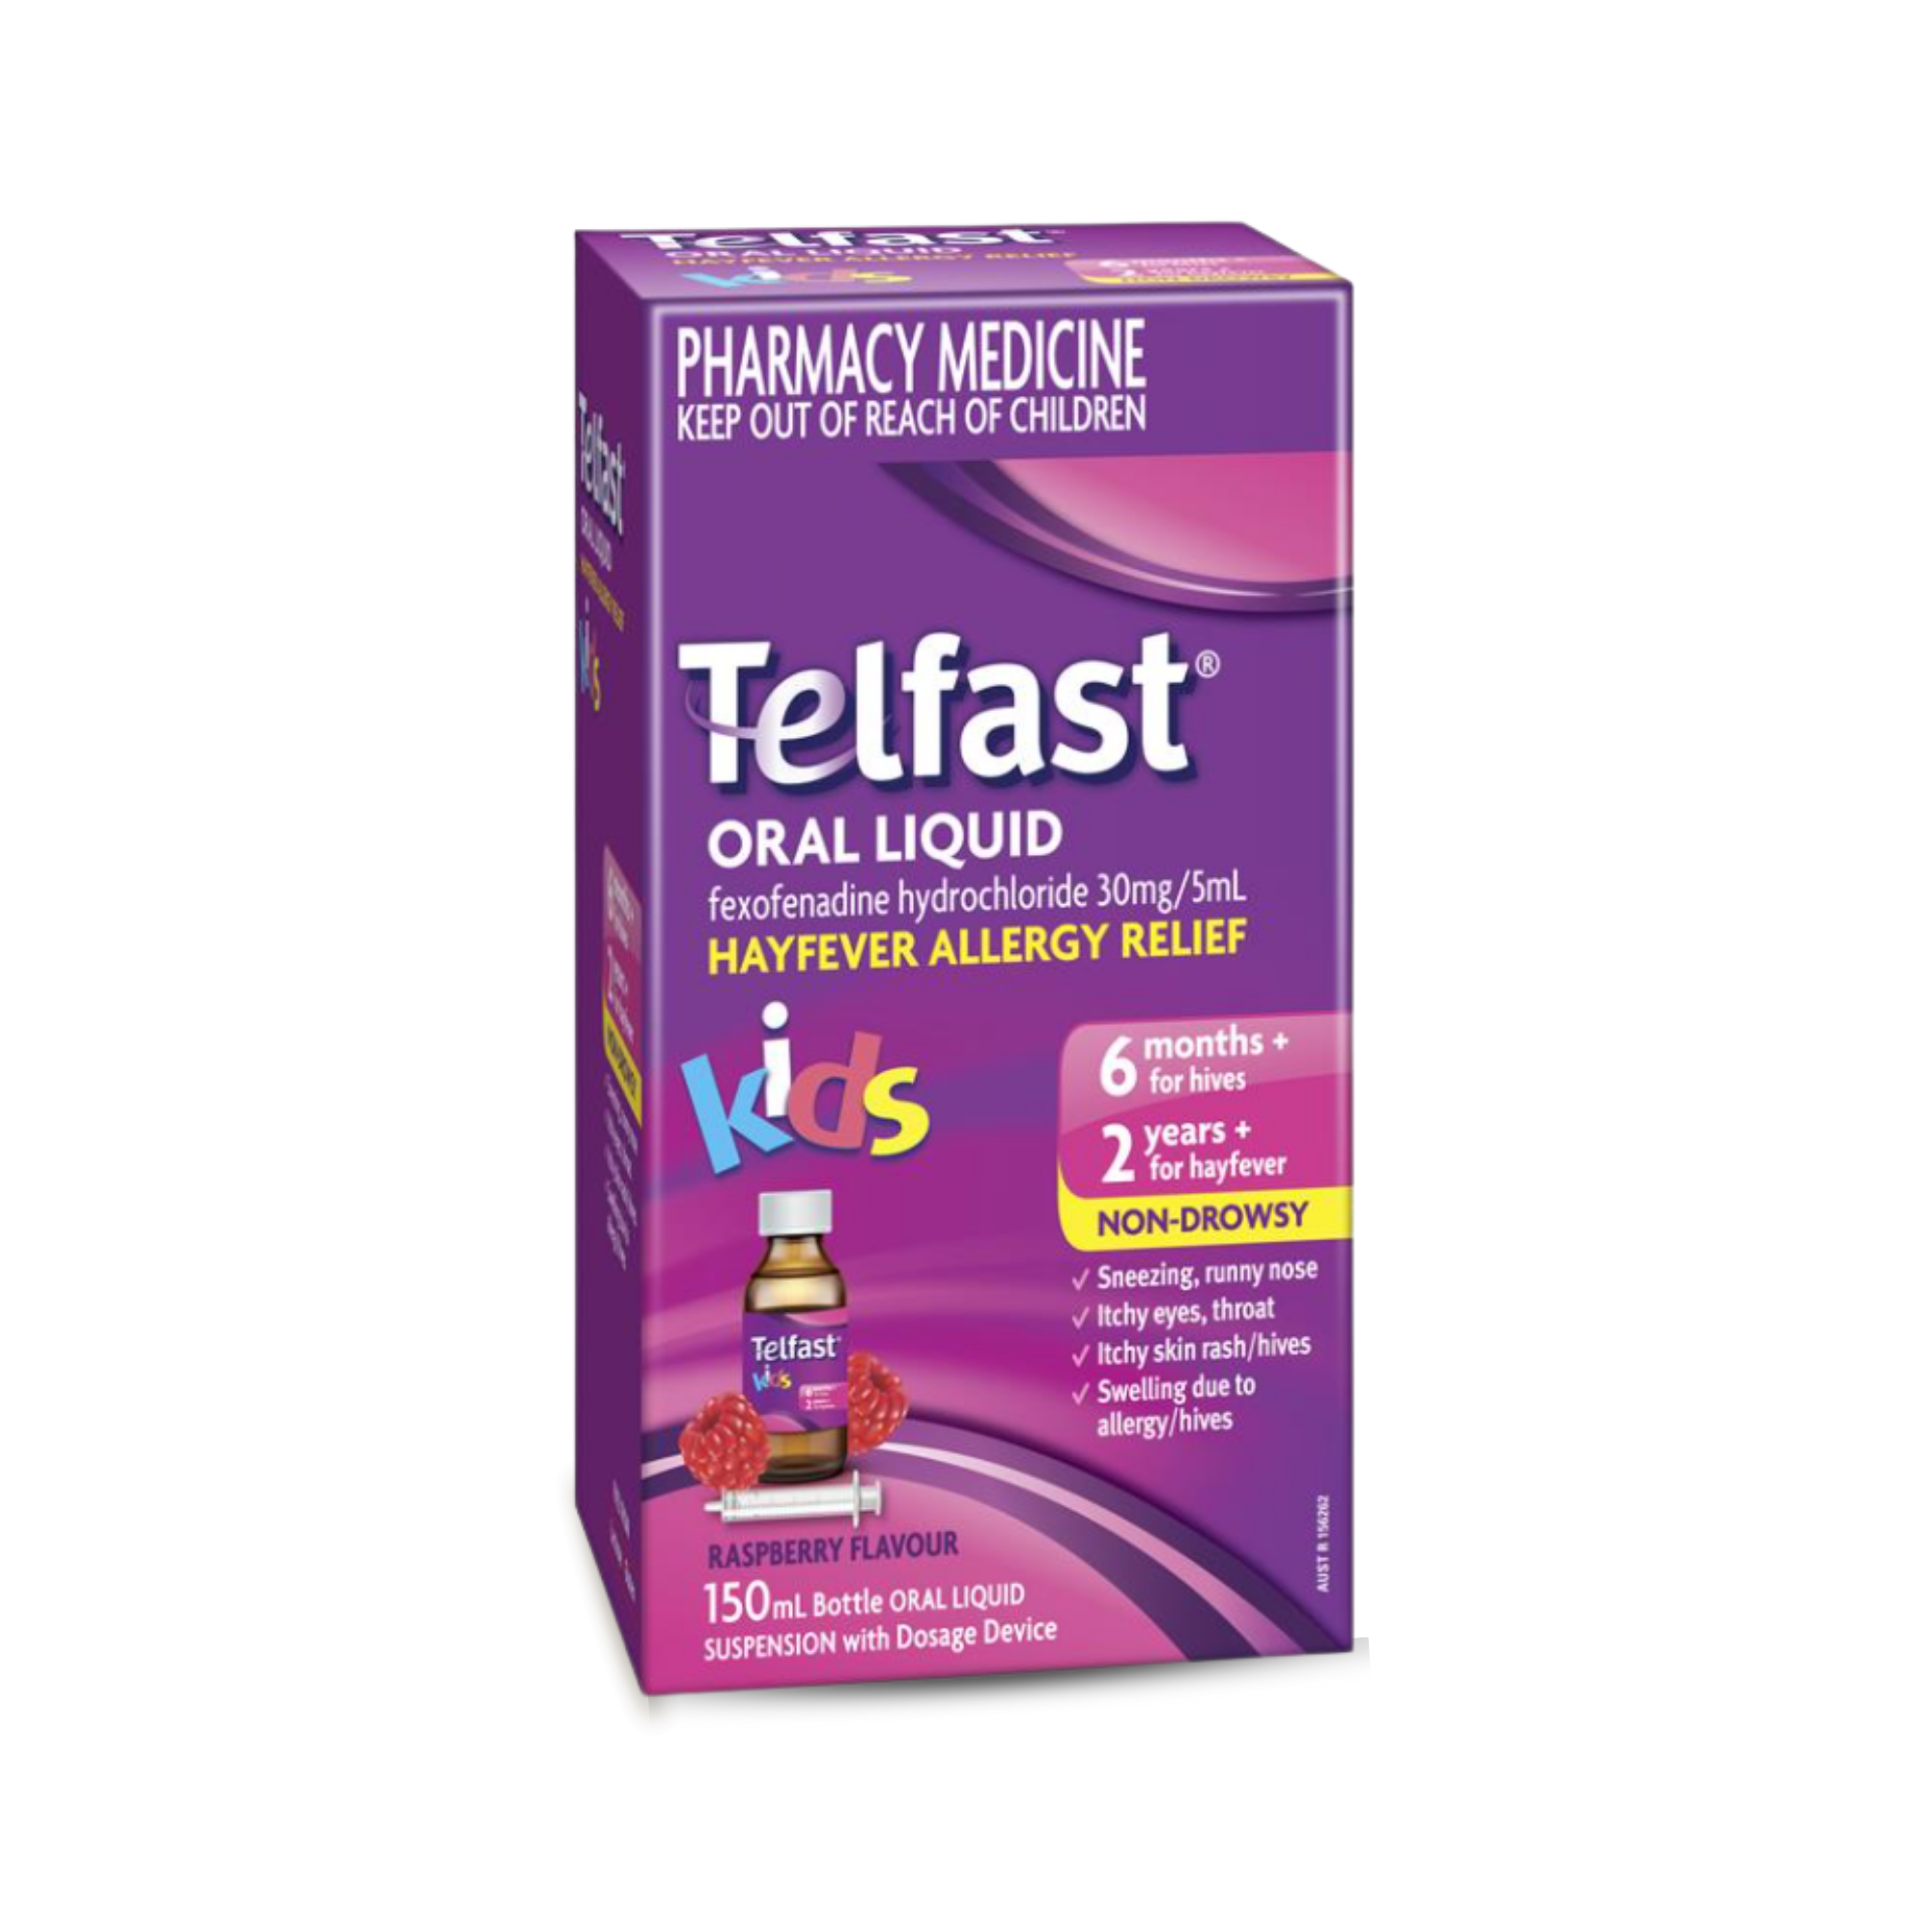 Telfast Oral Liquid for Kids - Hayfever Allergy Relief - Non-Drowsy Antihistamine - 150mL